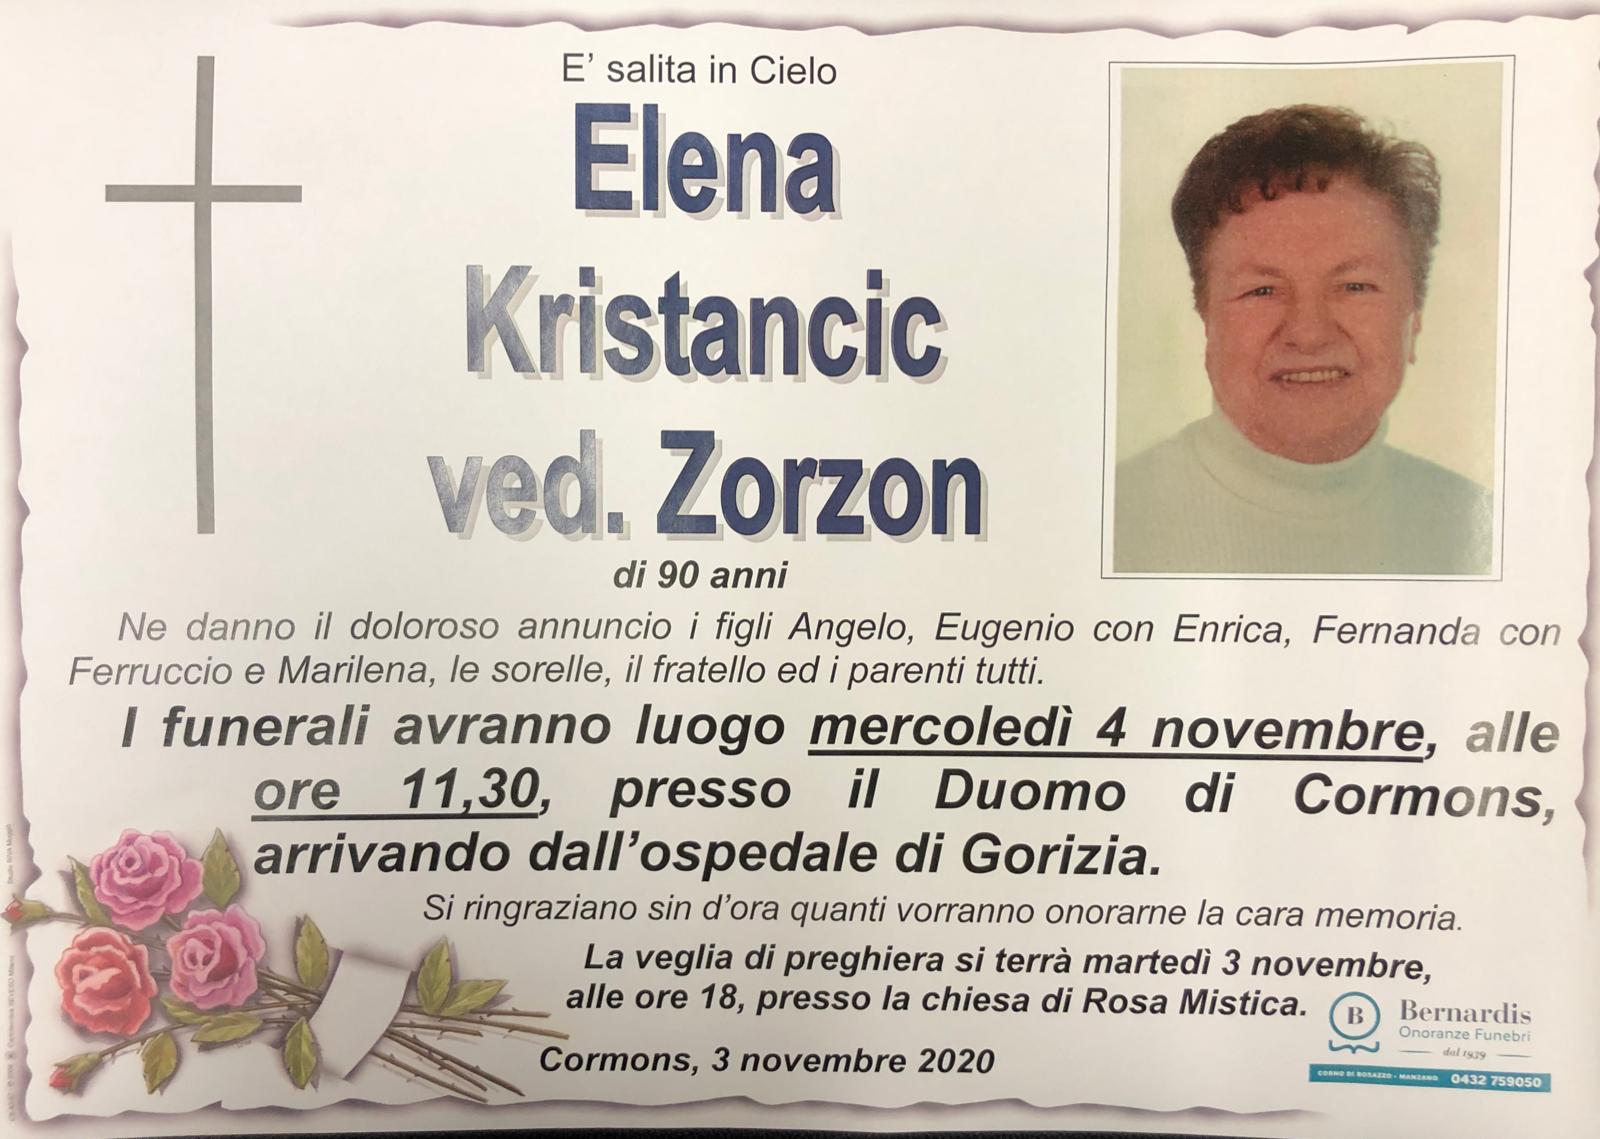 Elena Kristancic